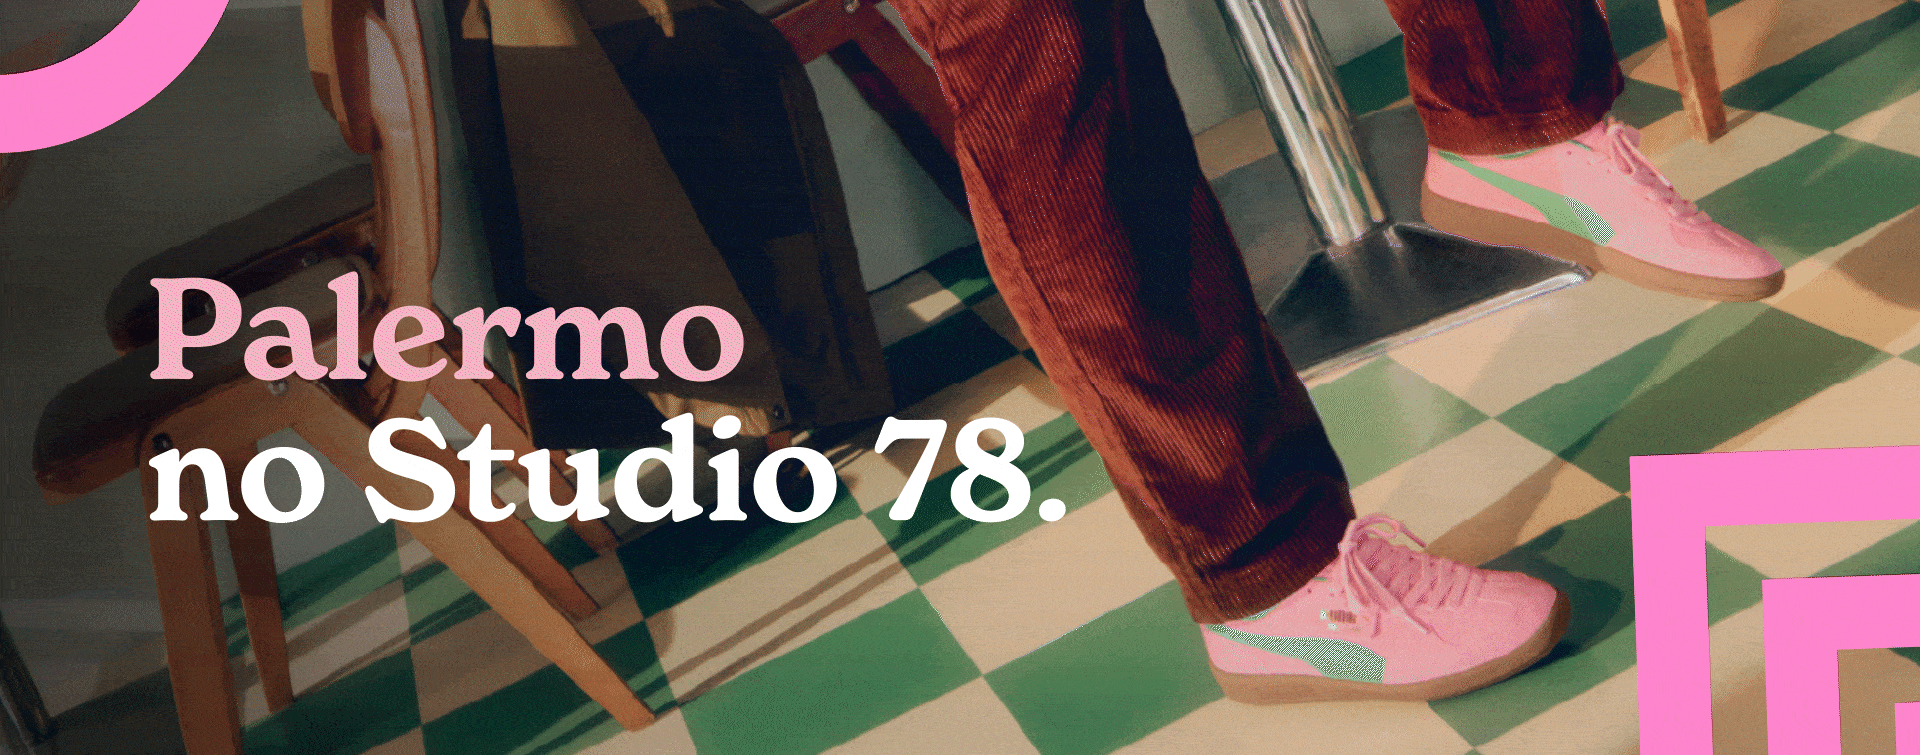 PALERMO - no studio78